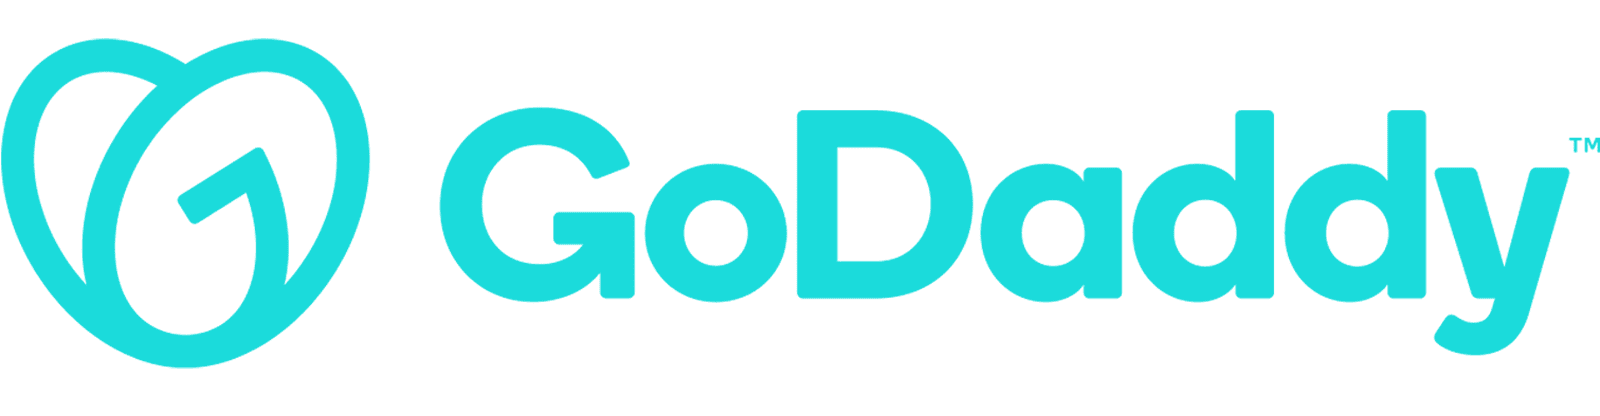 Godaddy logo